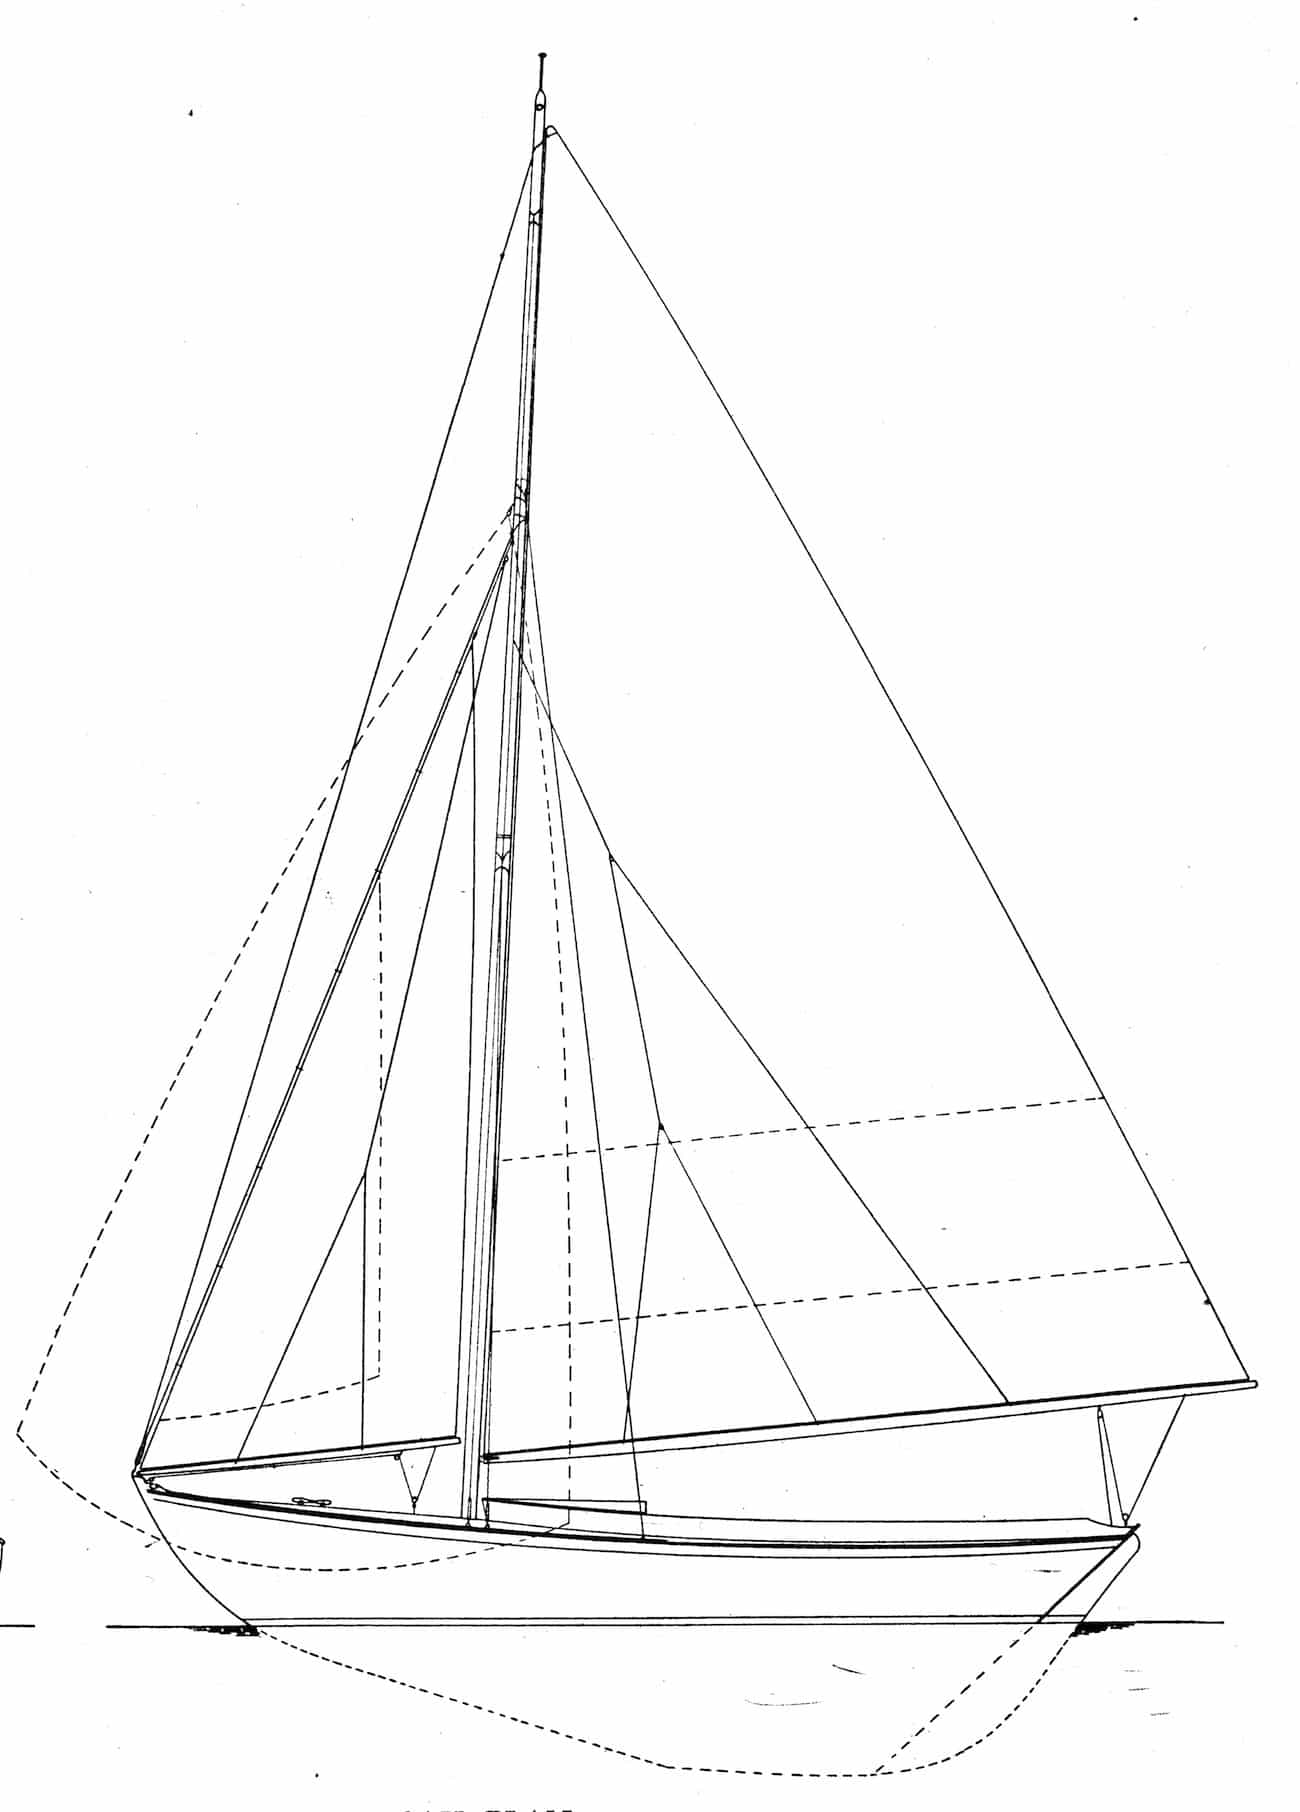 Em05 - Fine Boat Designs - The Herreshoff Fish Class - OffCenterHarbor.com